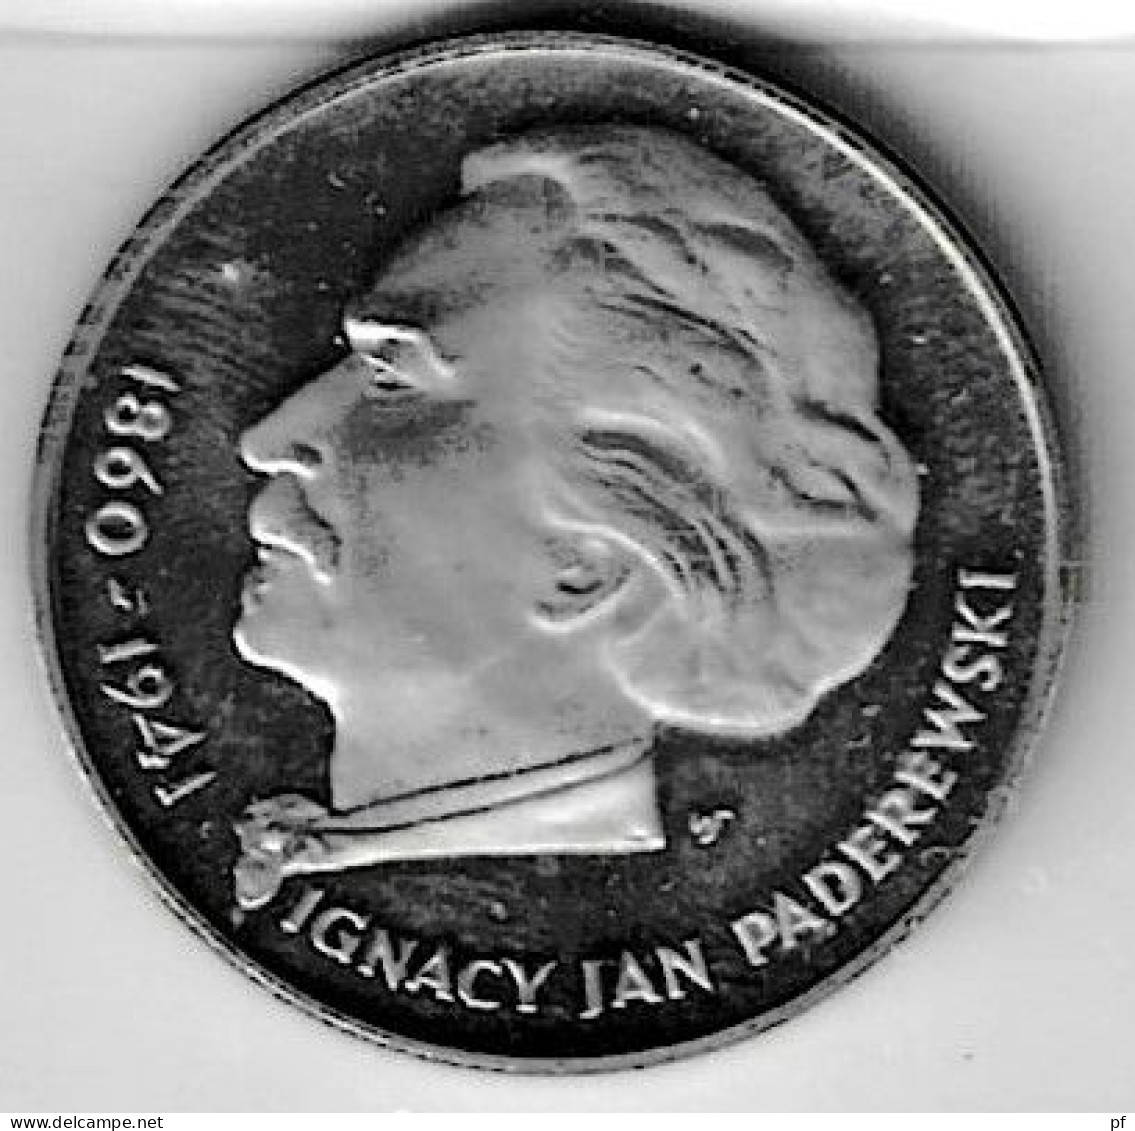 100 Zl  1975 (Ag)  Ignacy Jan Paderewski 1860-1941 - Polen